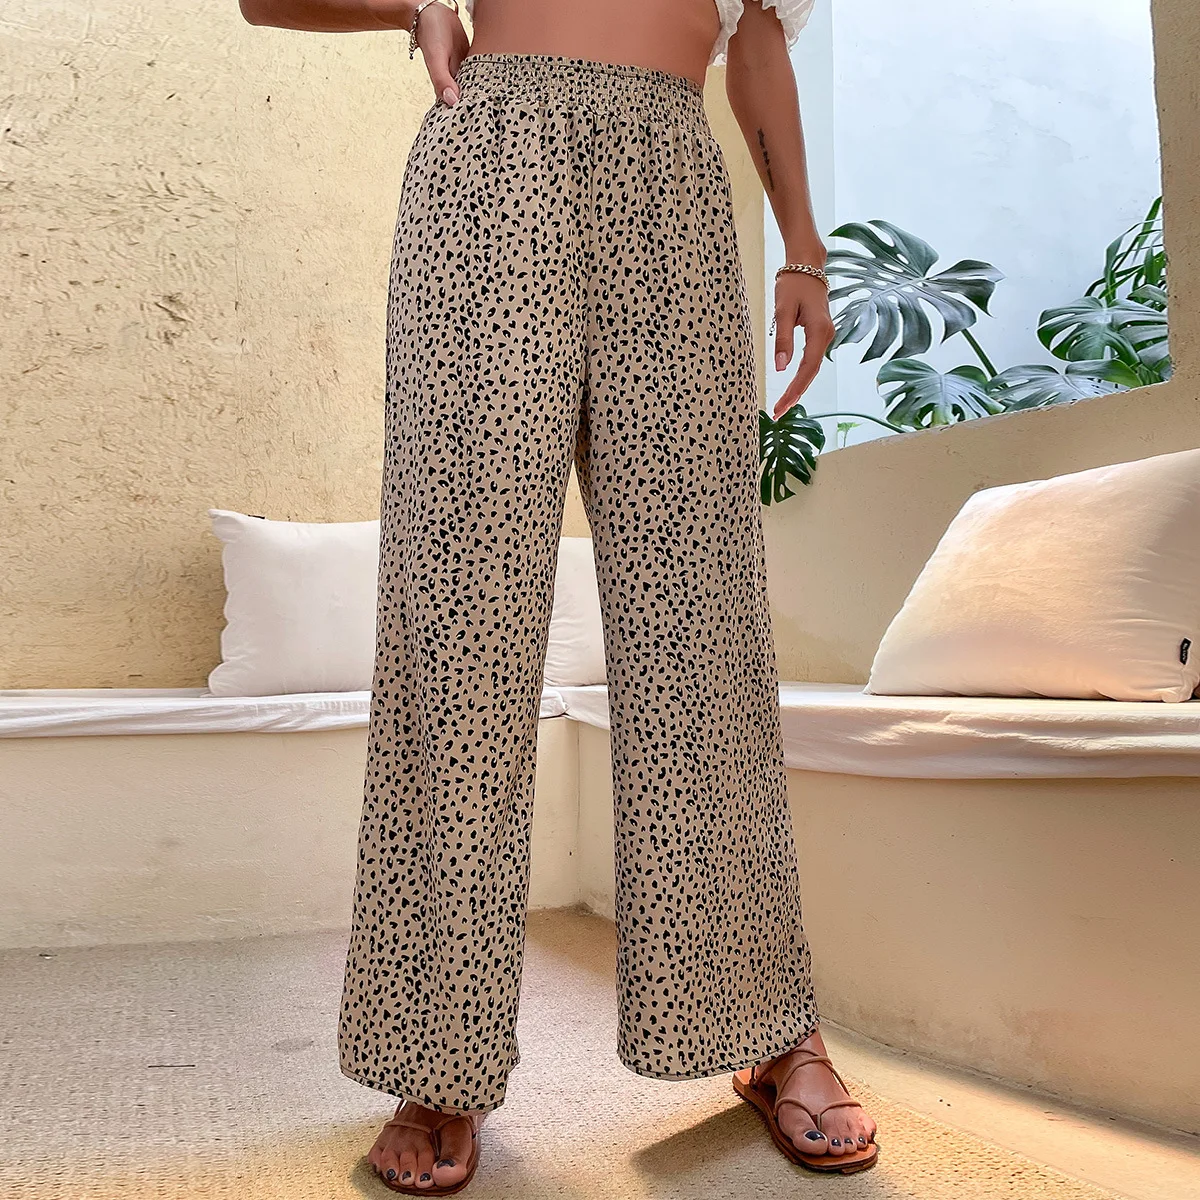 

Summer Ladies Loose High Elastic Waist Pants Women Casual Fashion Printed Polka Dots Trousers Femme Wide Leg Pantalon